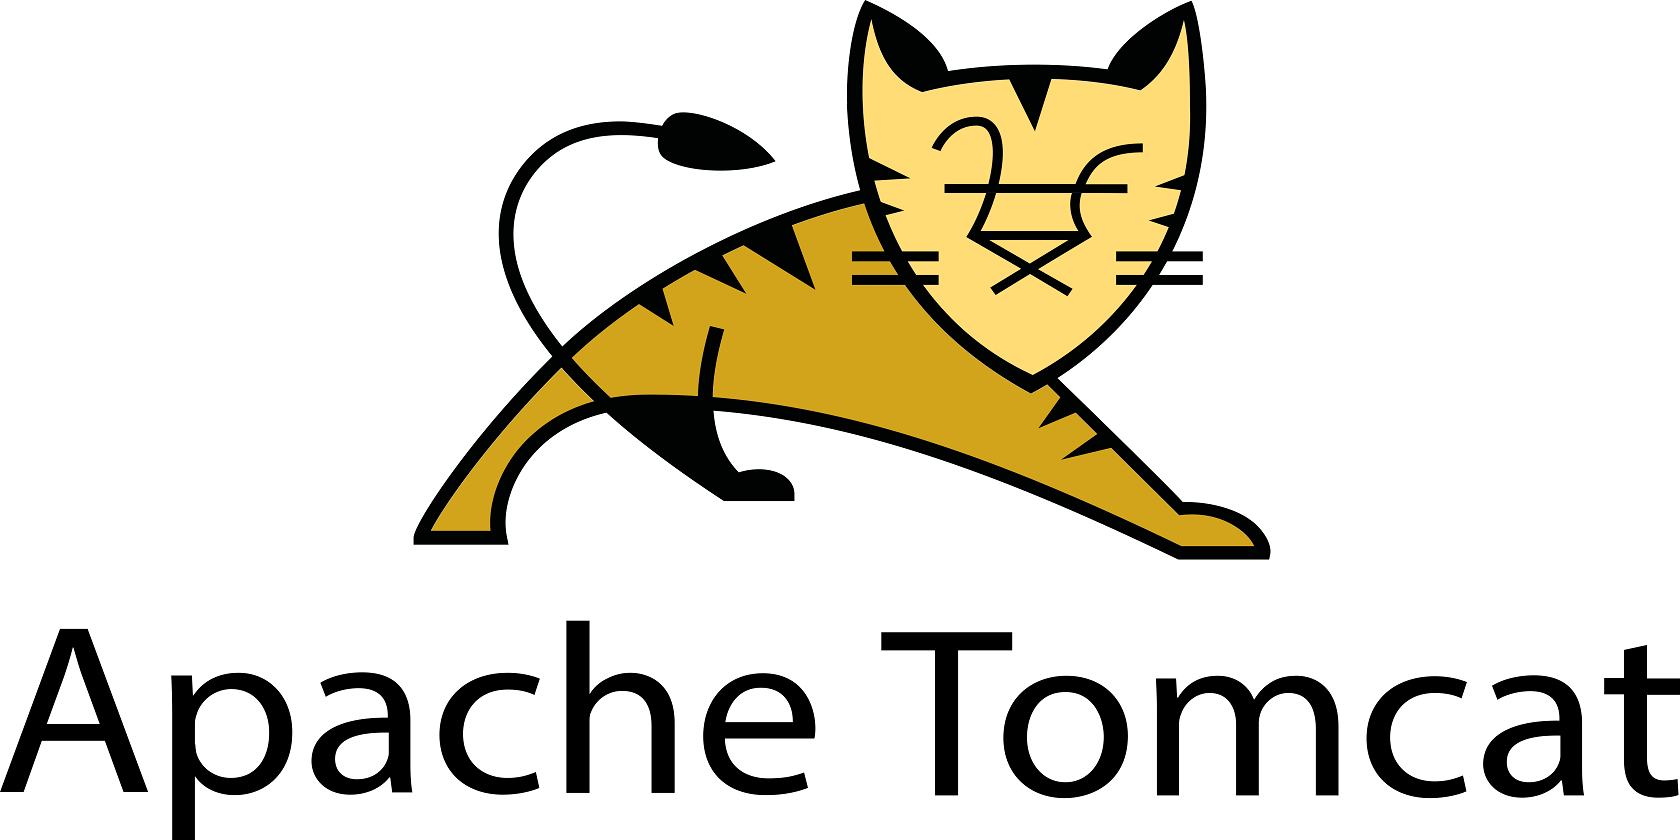 apache tomcat logo